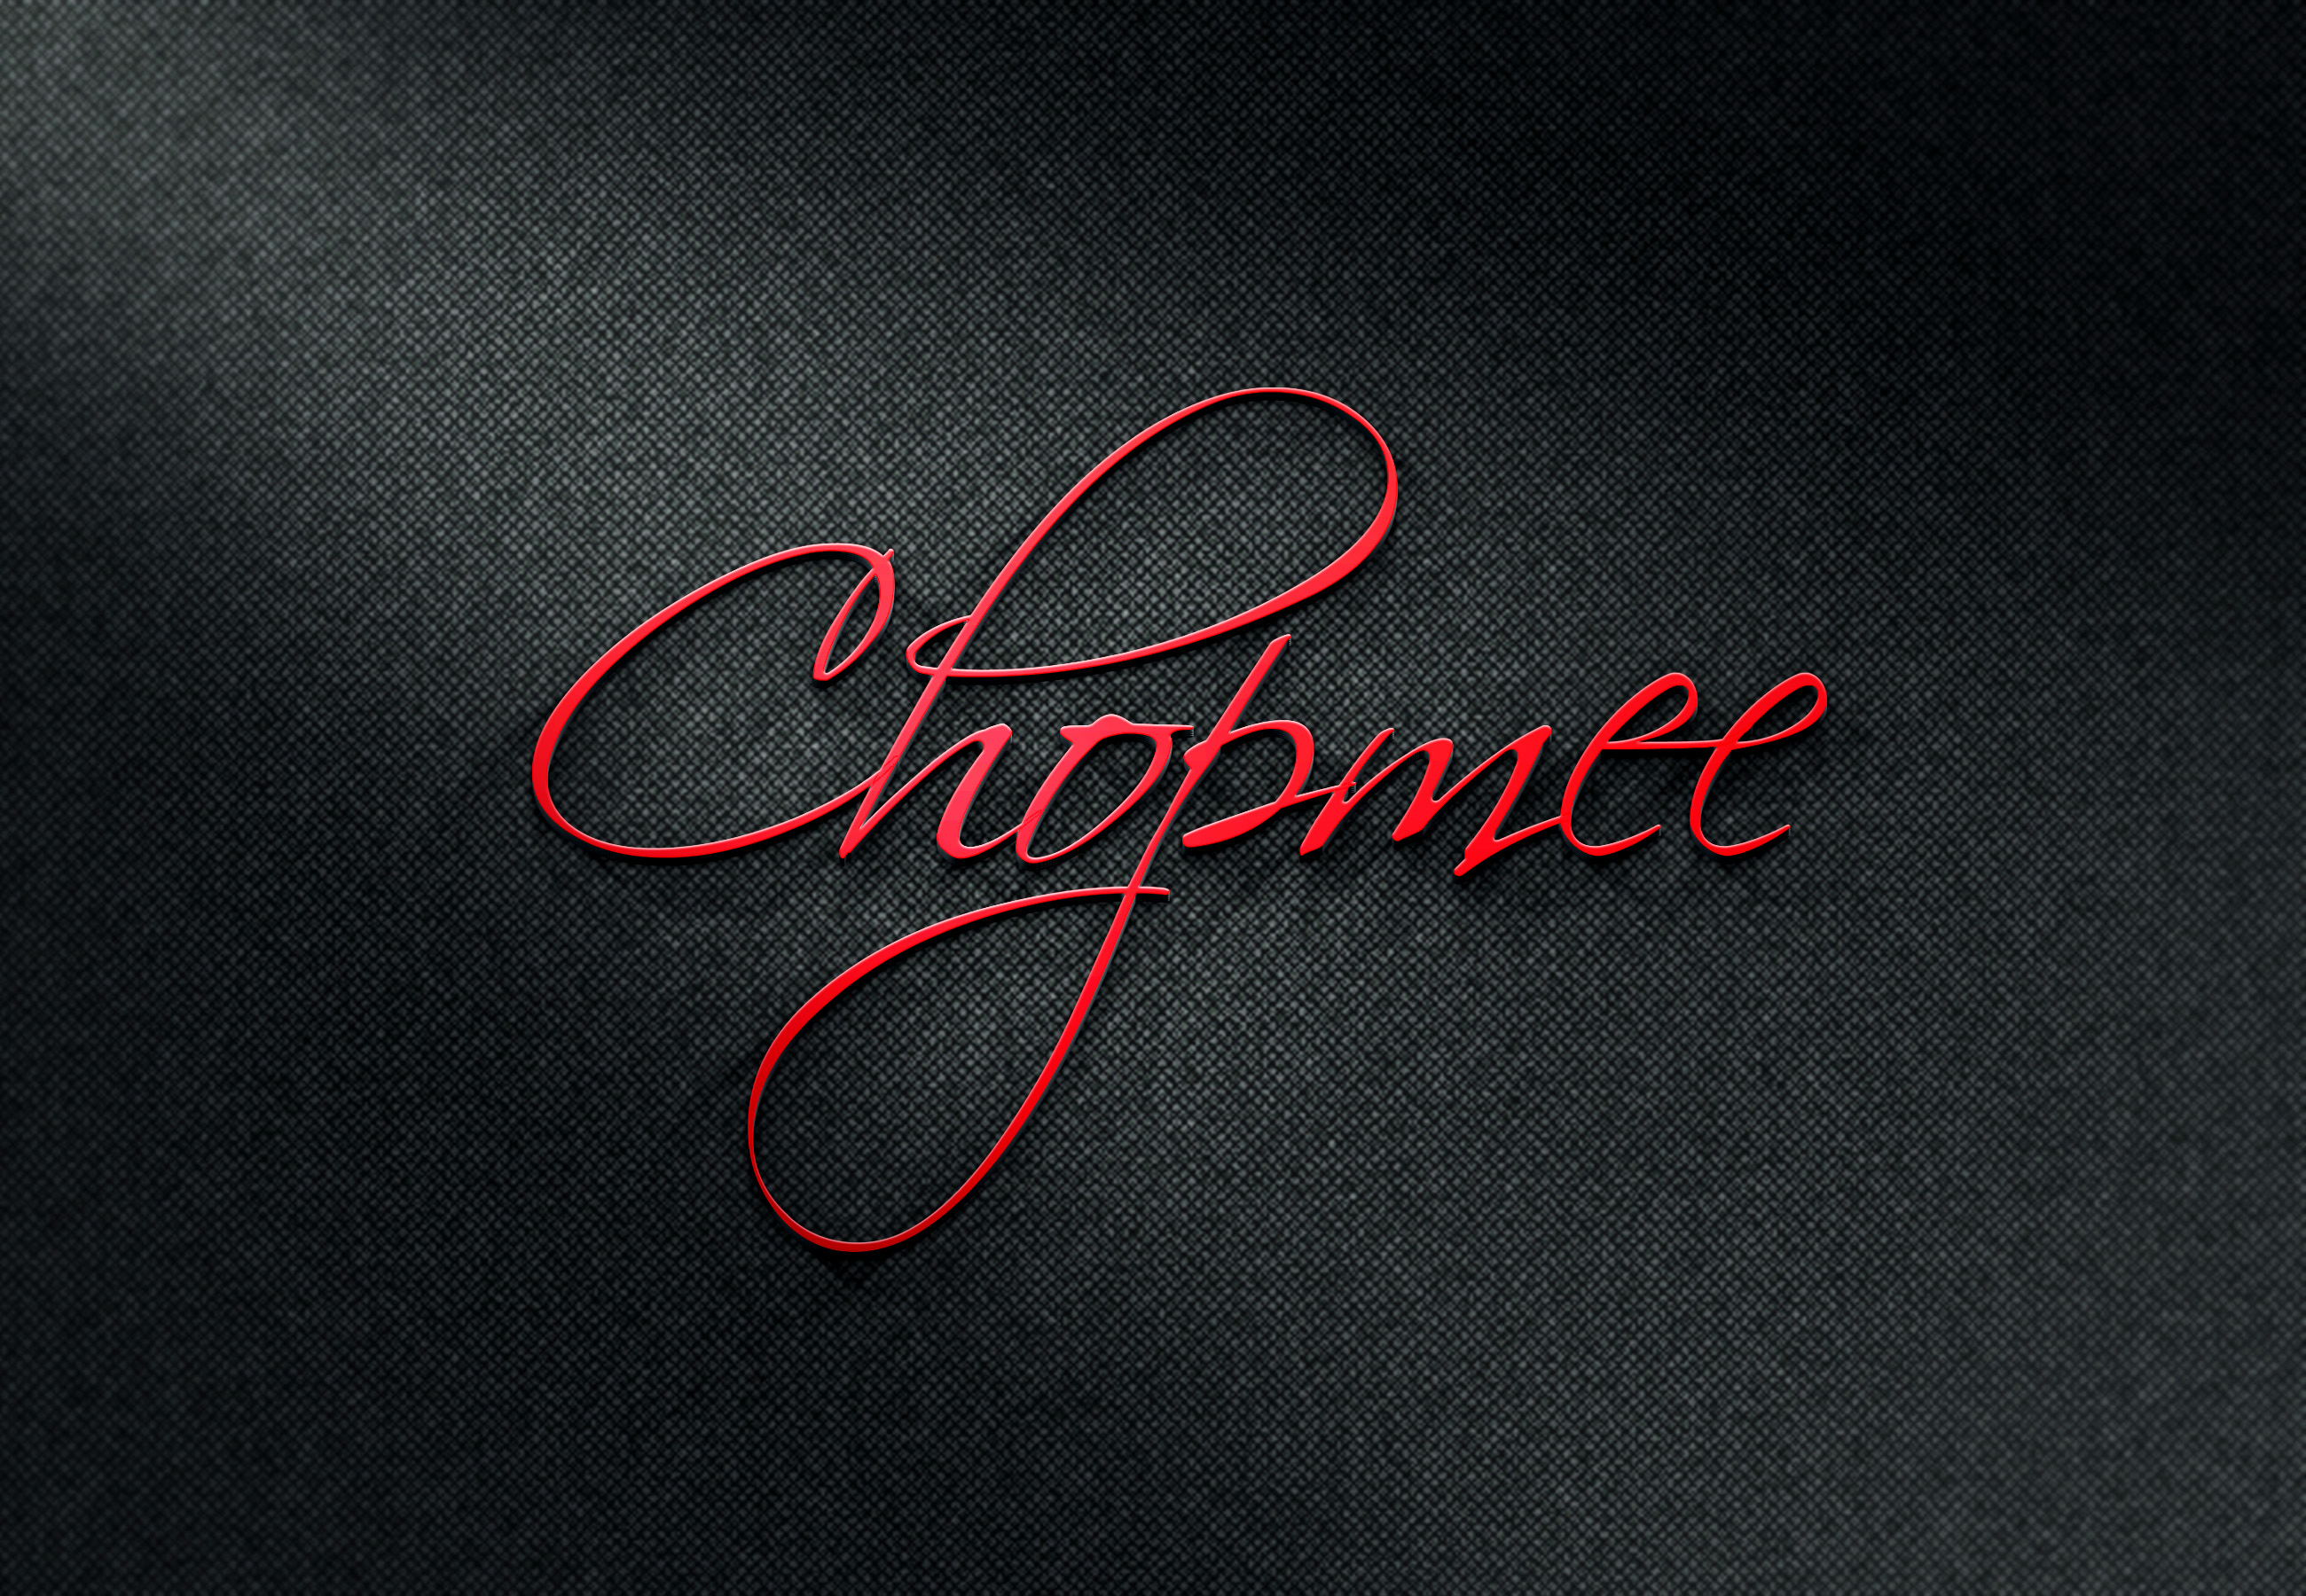 chopmee coupons logo